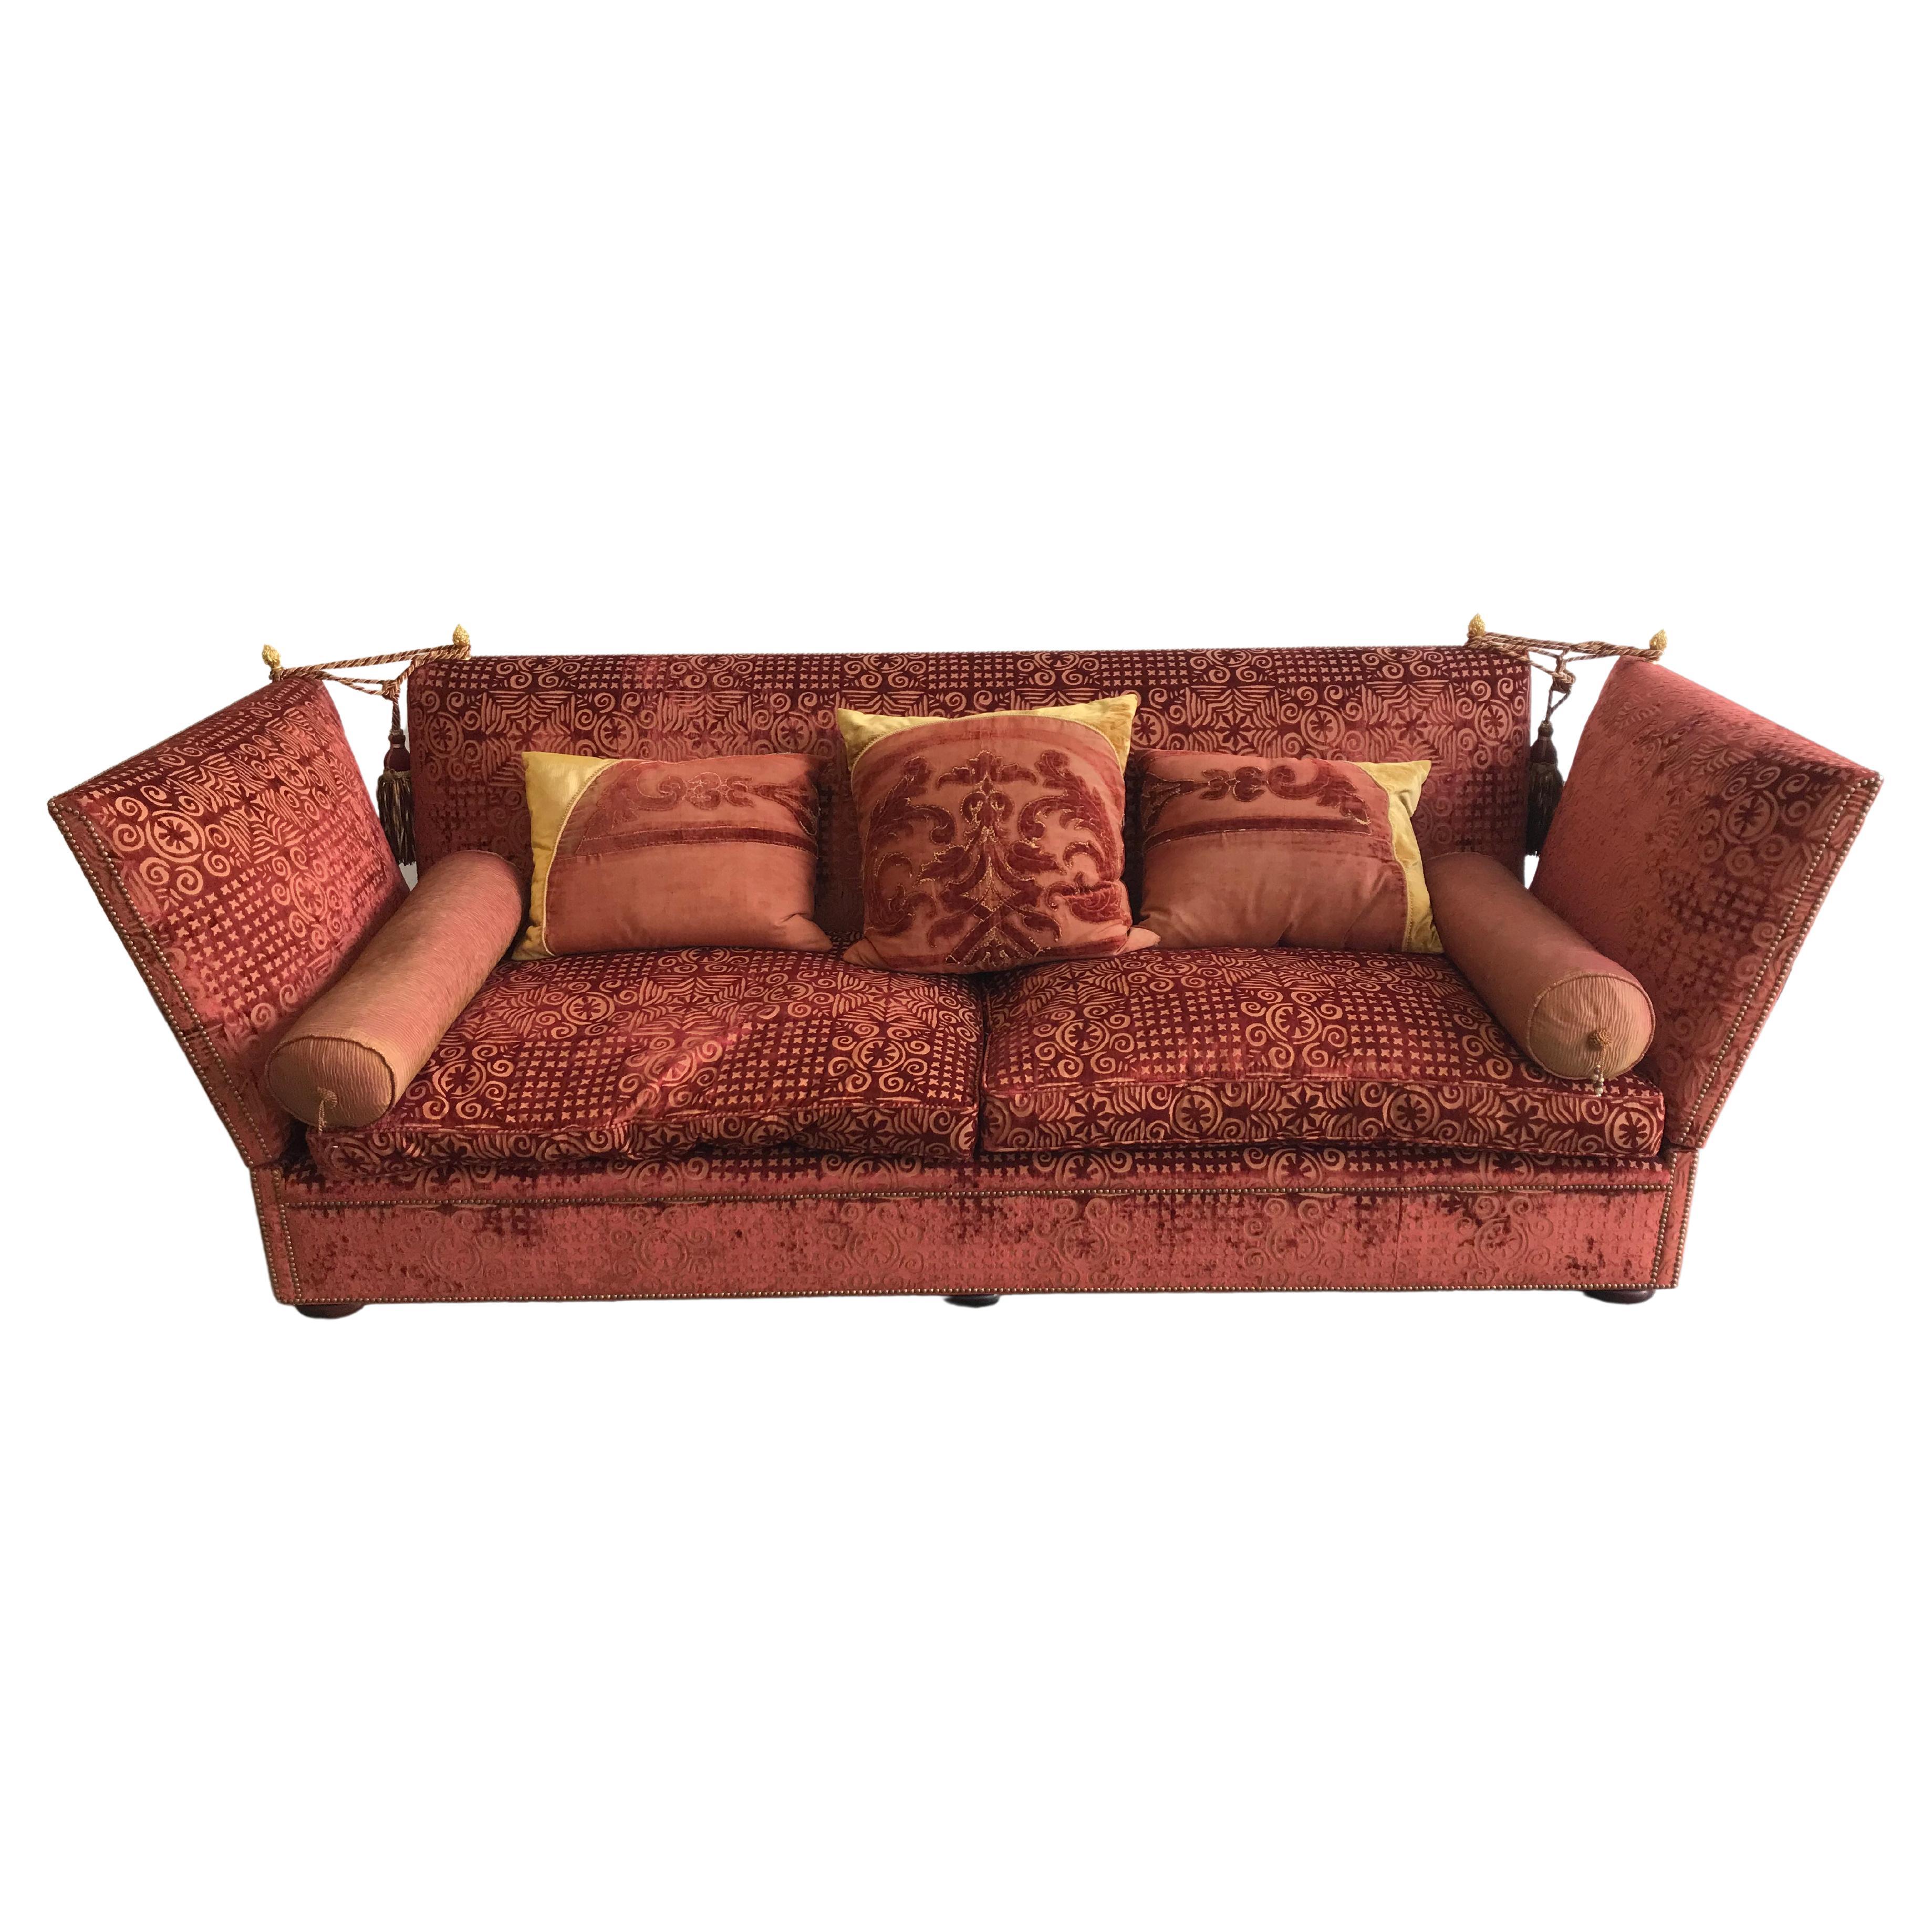 Knole Sofa by George Smith